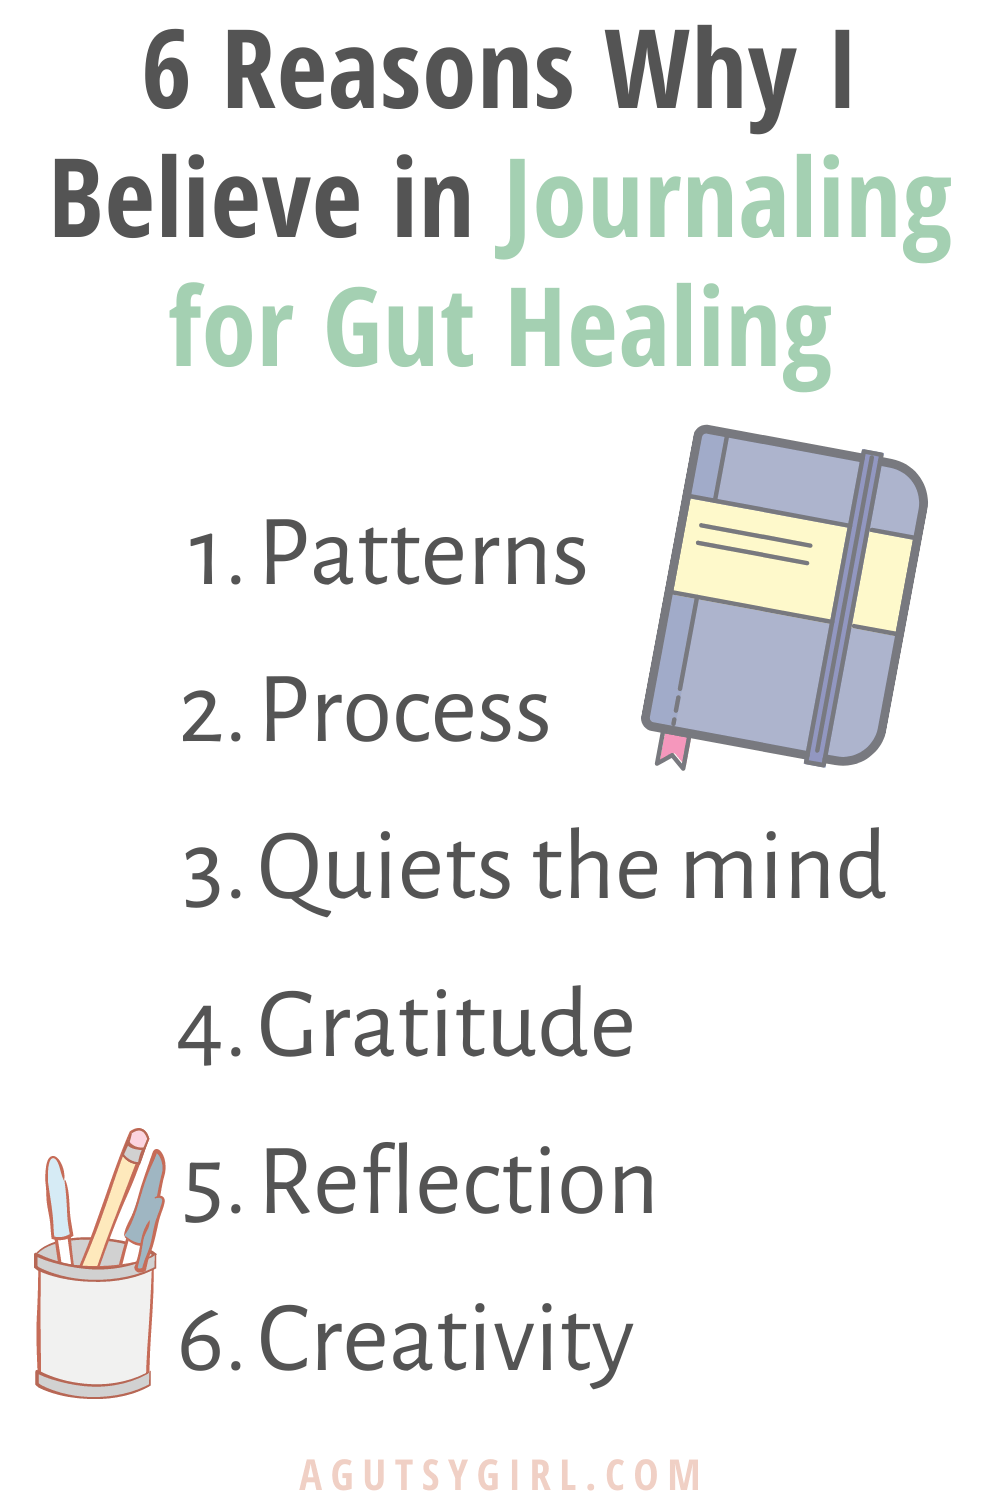 Journaling for Gut Healing 6 reasons why agutsygirl.com #guthealth #bujo #journaling